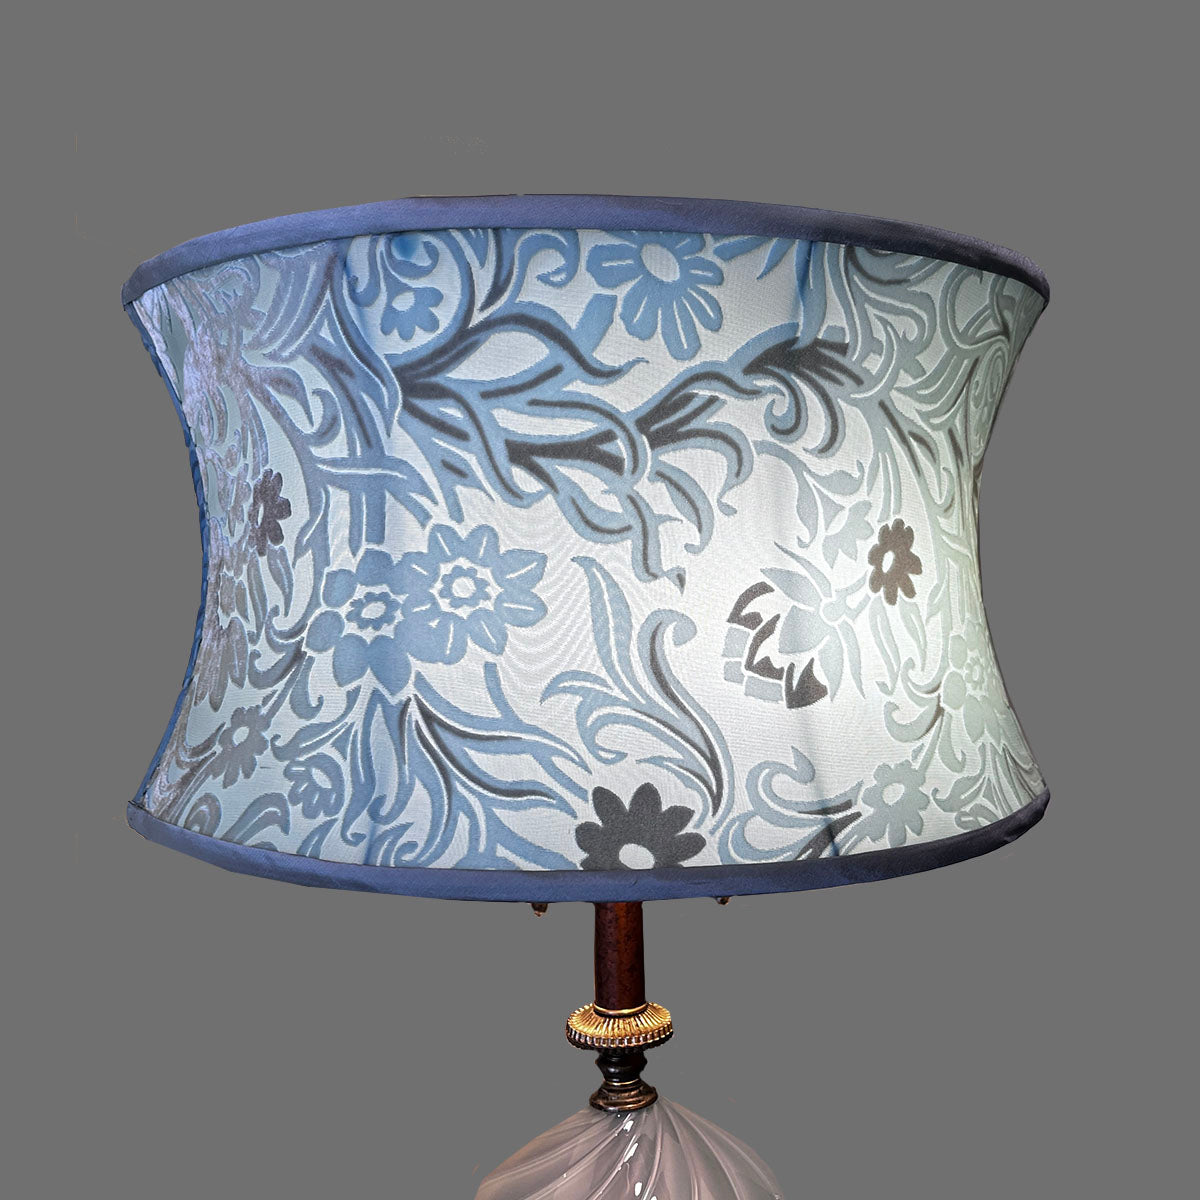 Kinzig Design lamp shade. Kevin O'Brien fabric